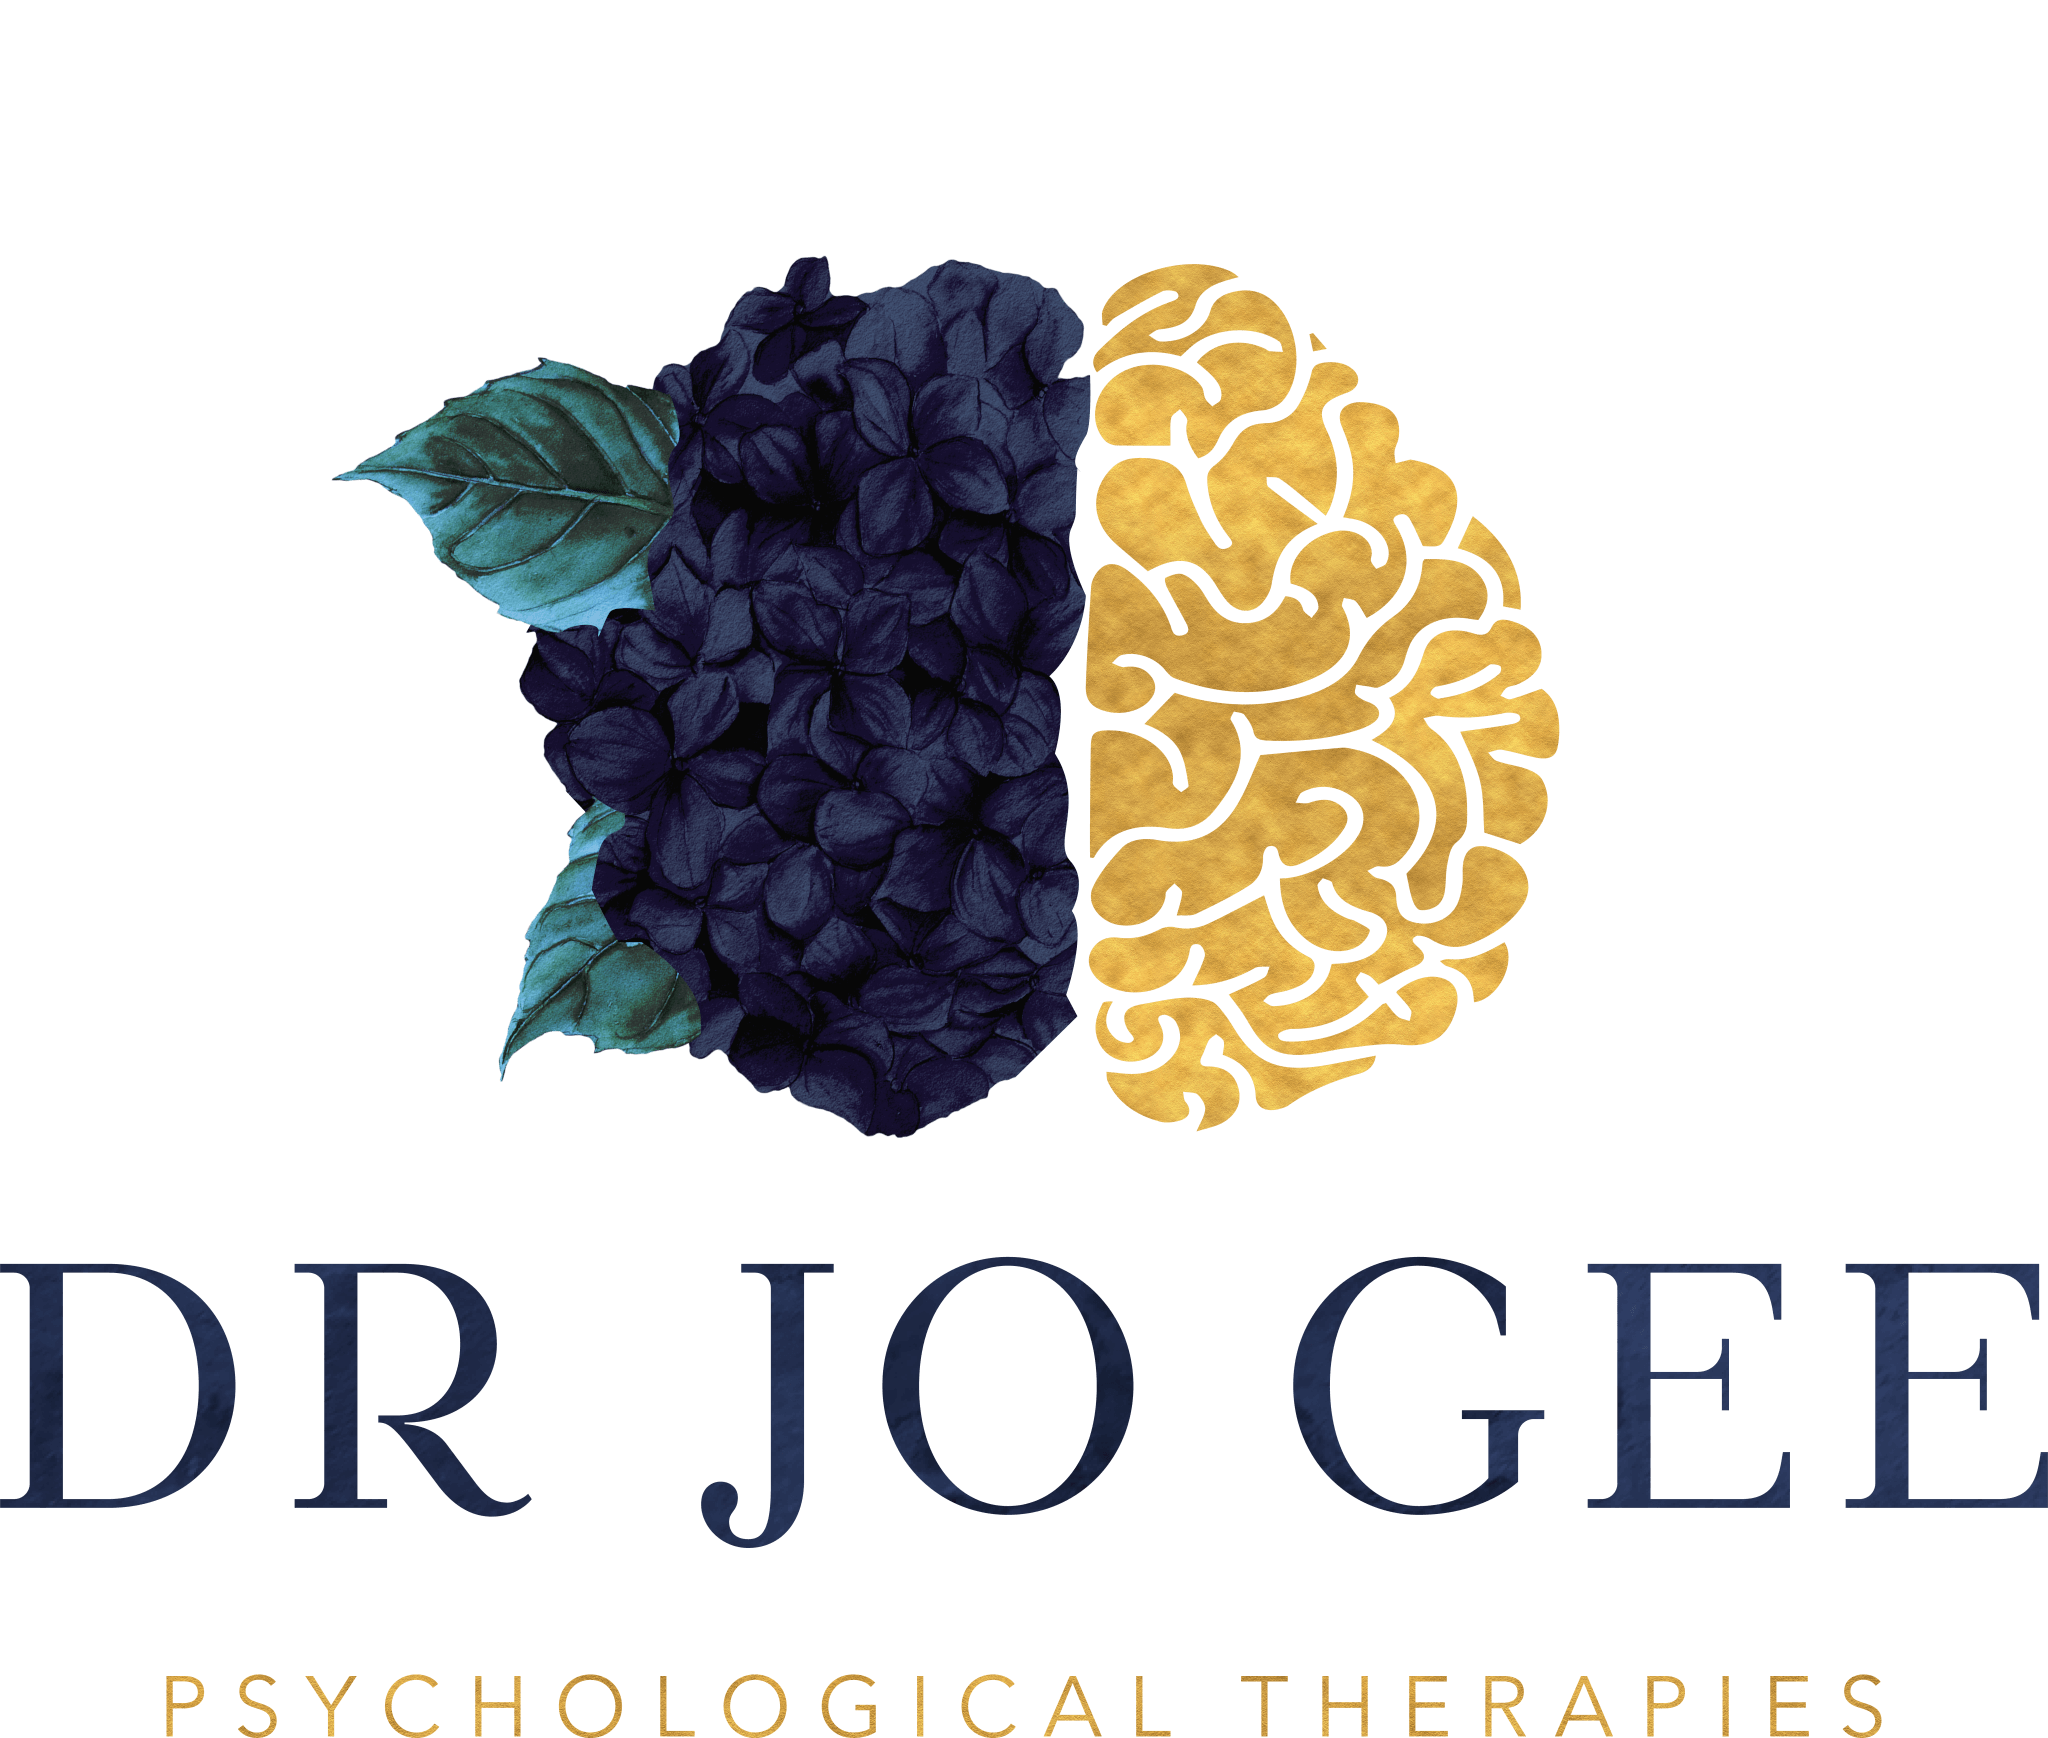 Dr Jo Gee flower logo background removed